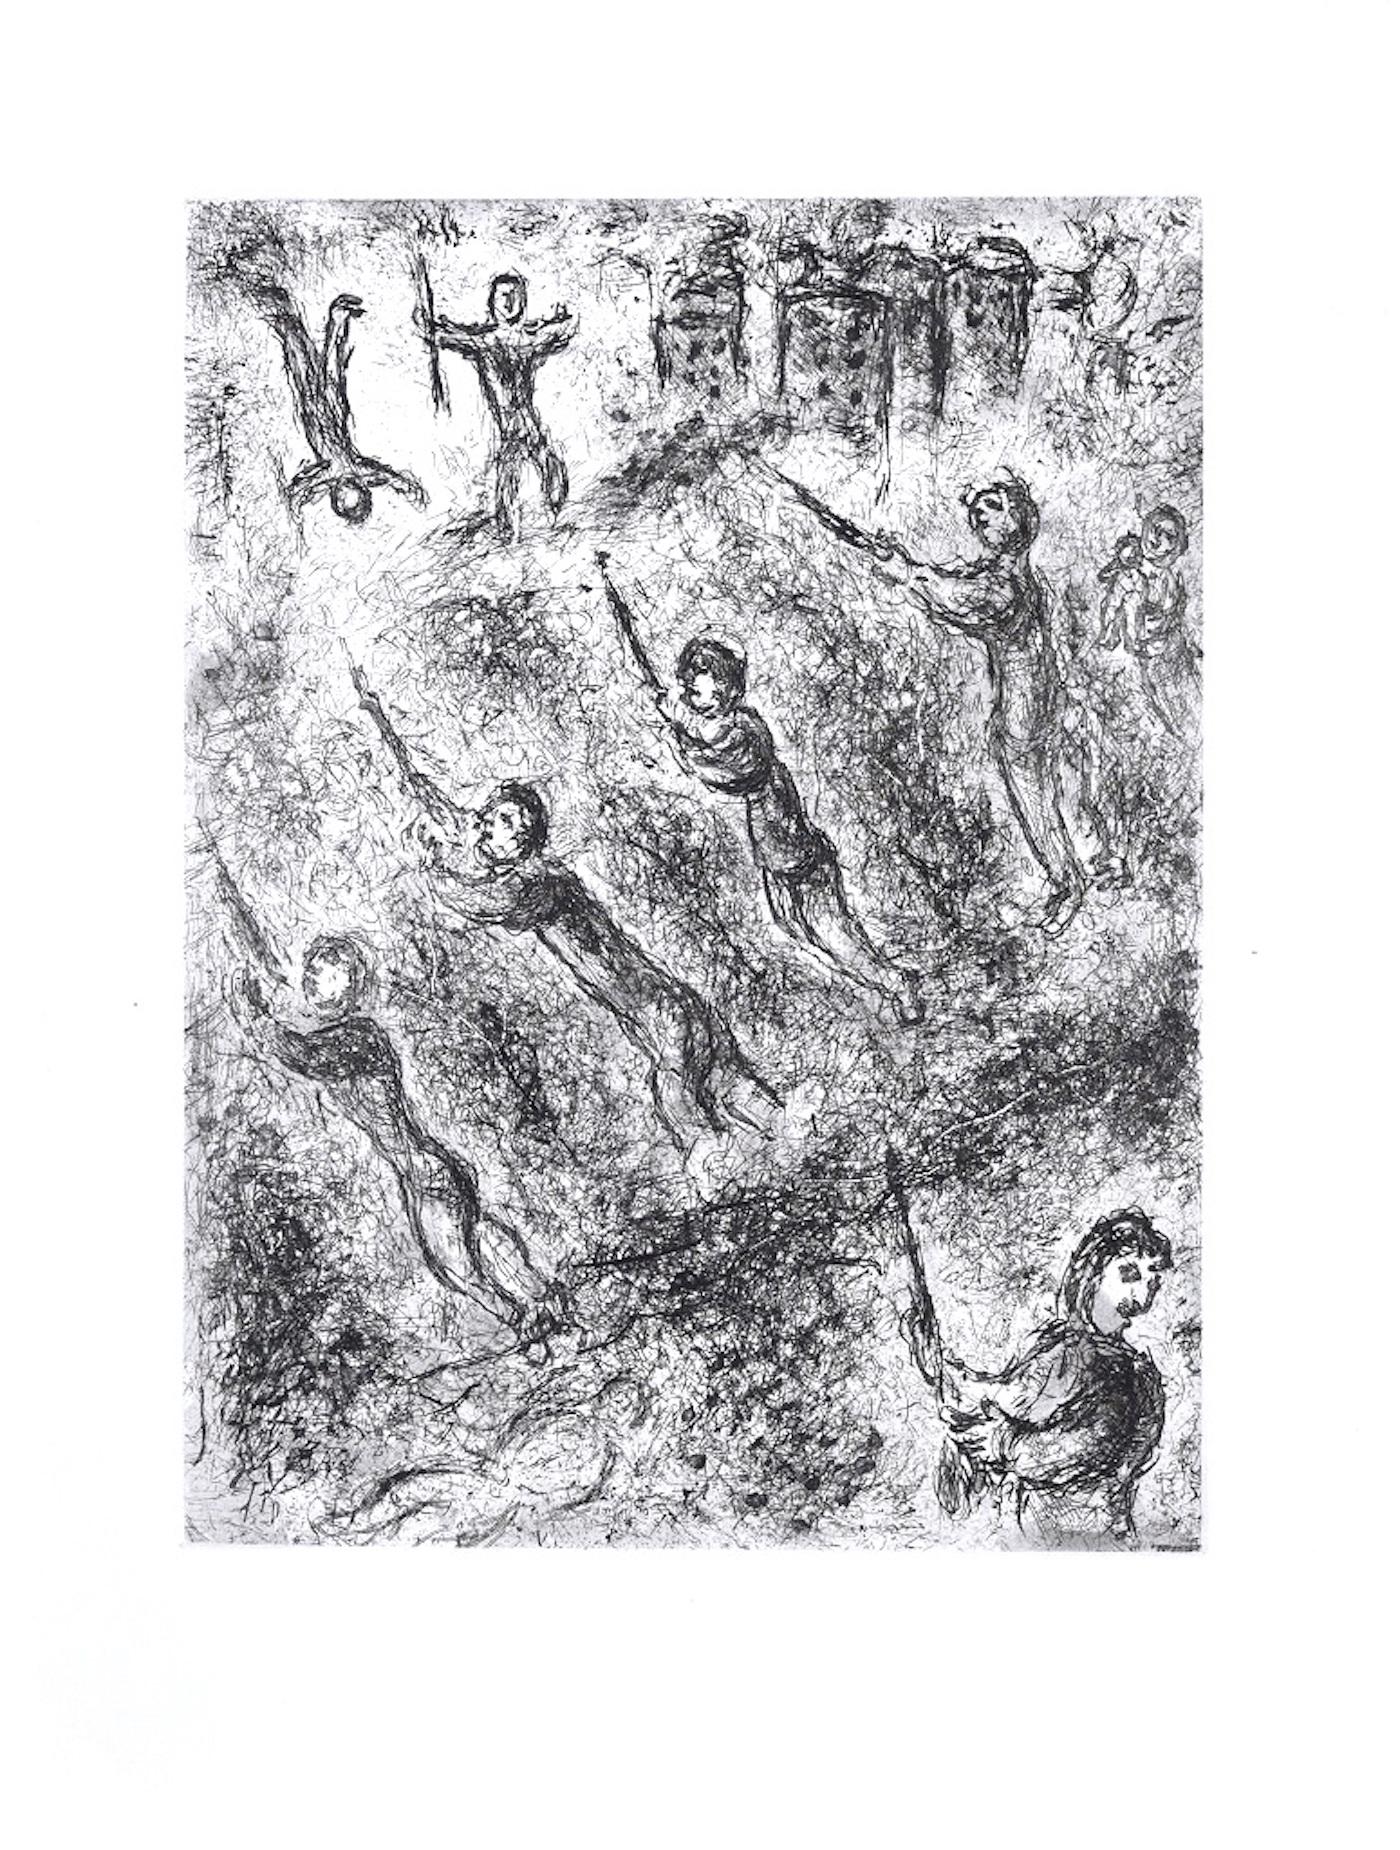 La Tranchée  - Etching by M. Chagall - 1977